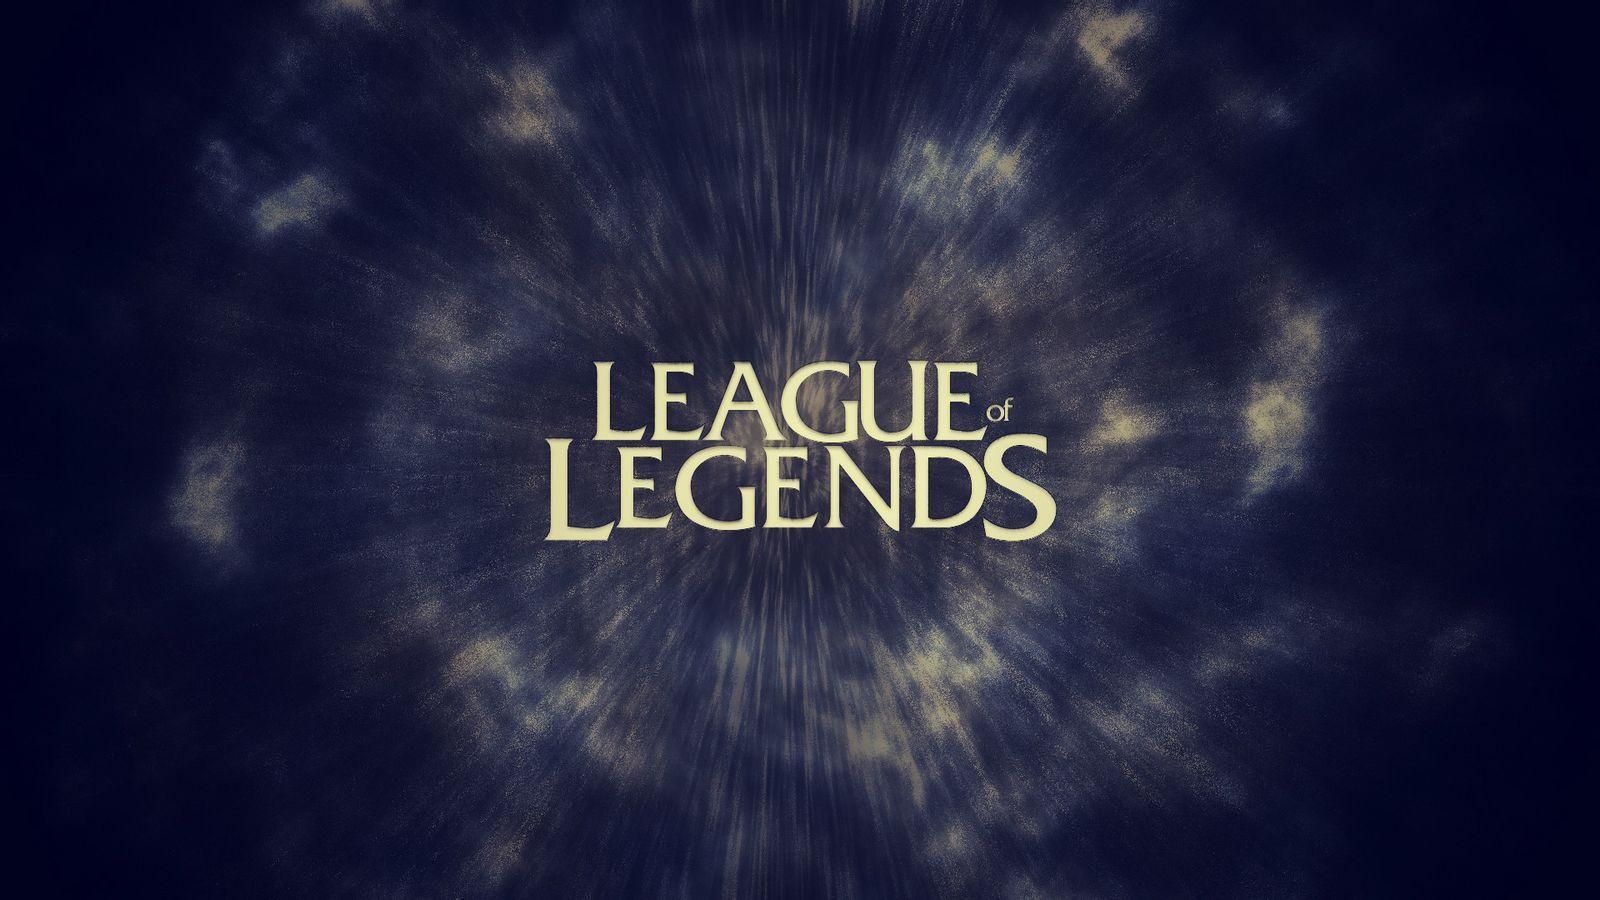 League of Legends HD Wallpaper Download - League of Legends HD ...